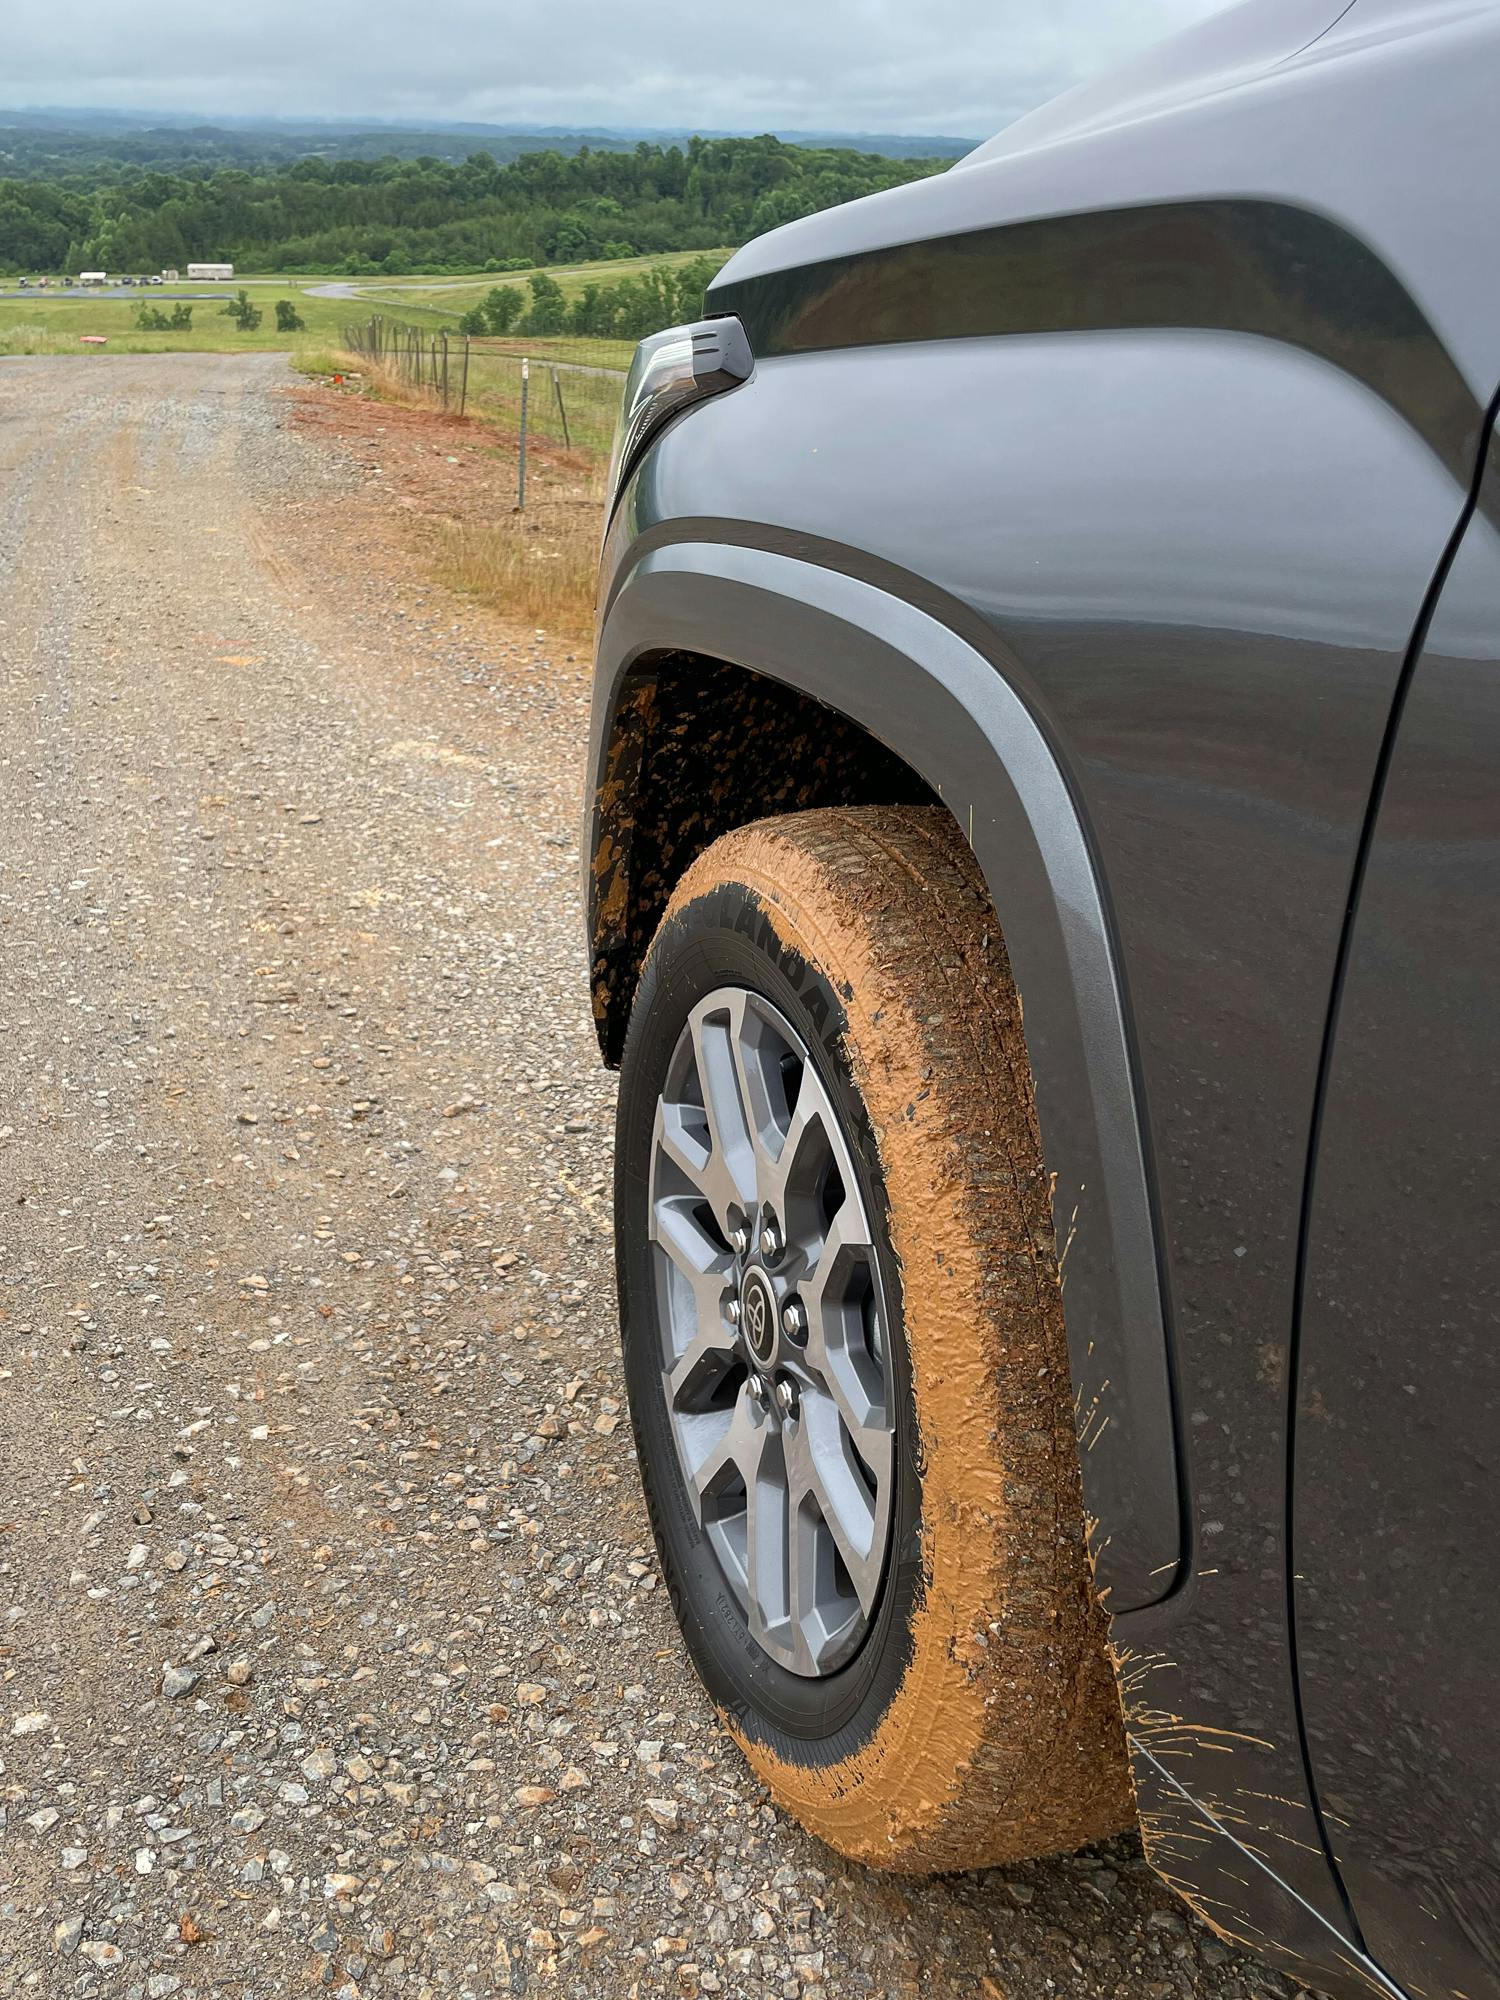 2022 Toyota Tundra 4×4 1794 Edition muddy tire